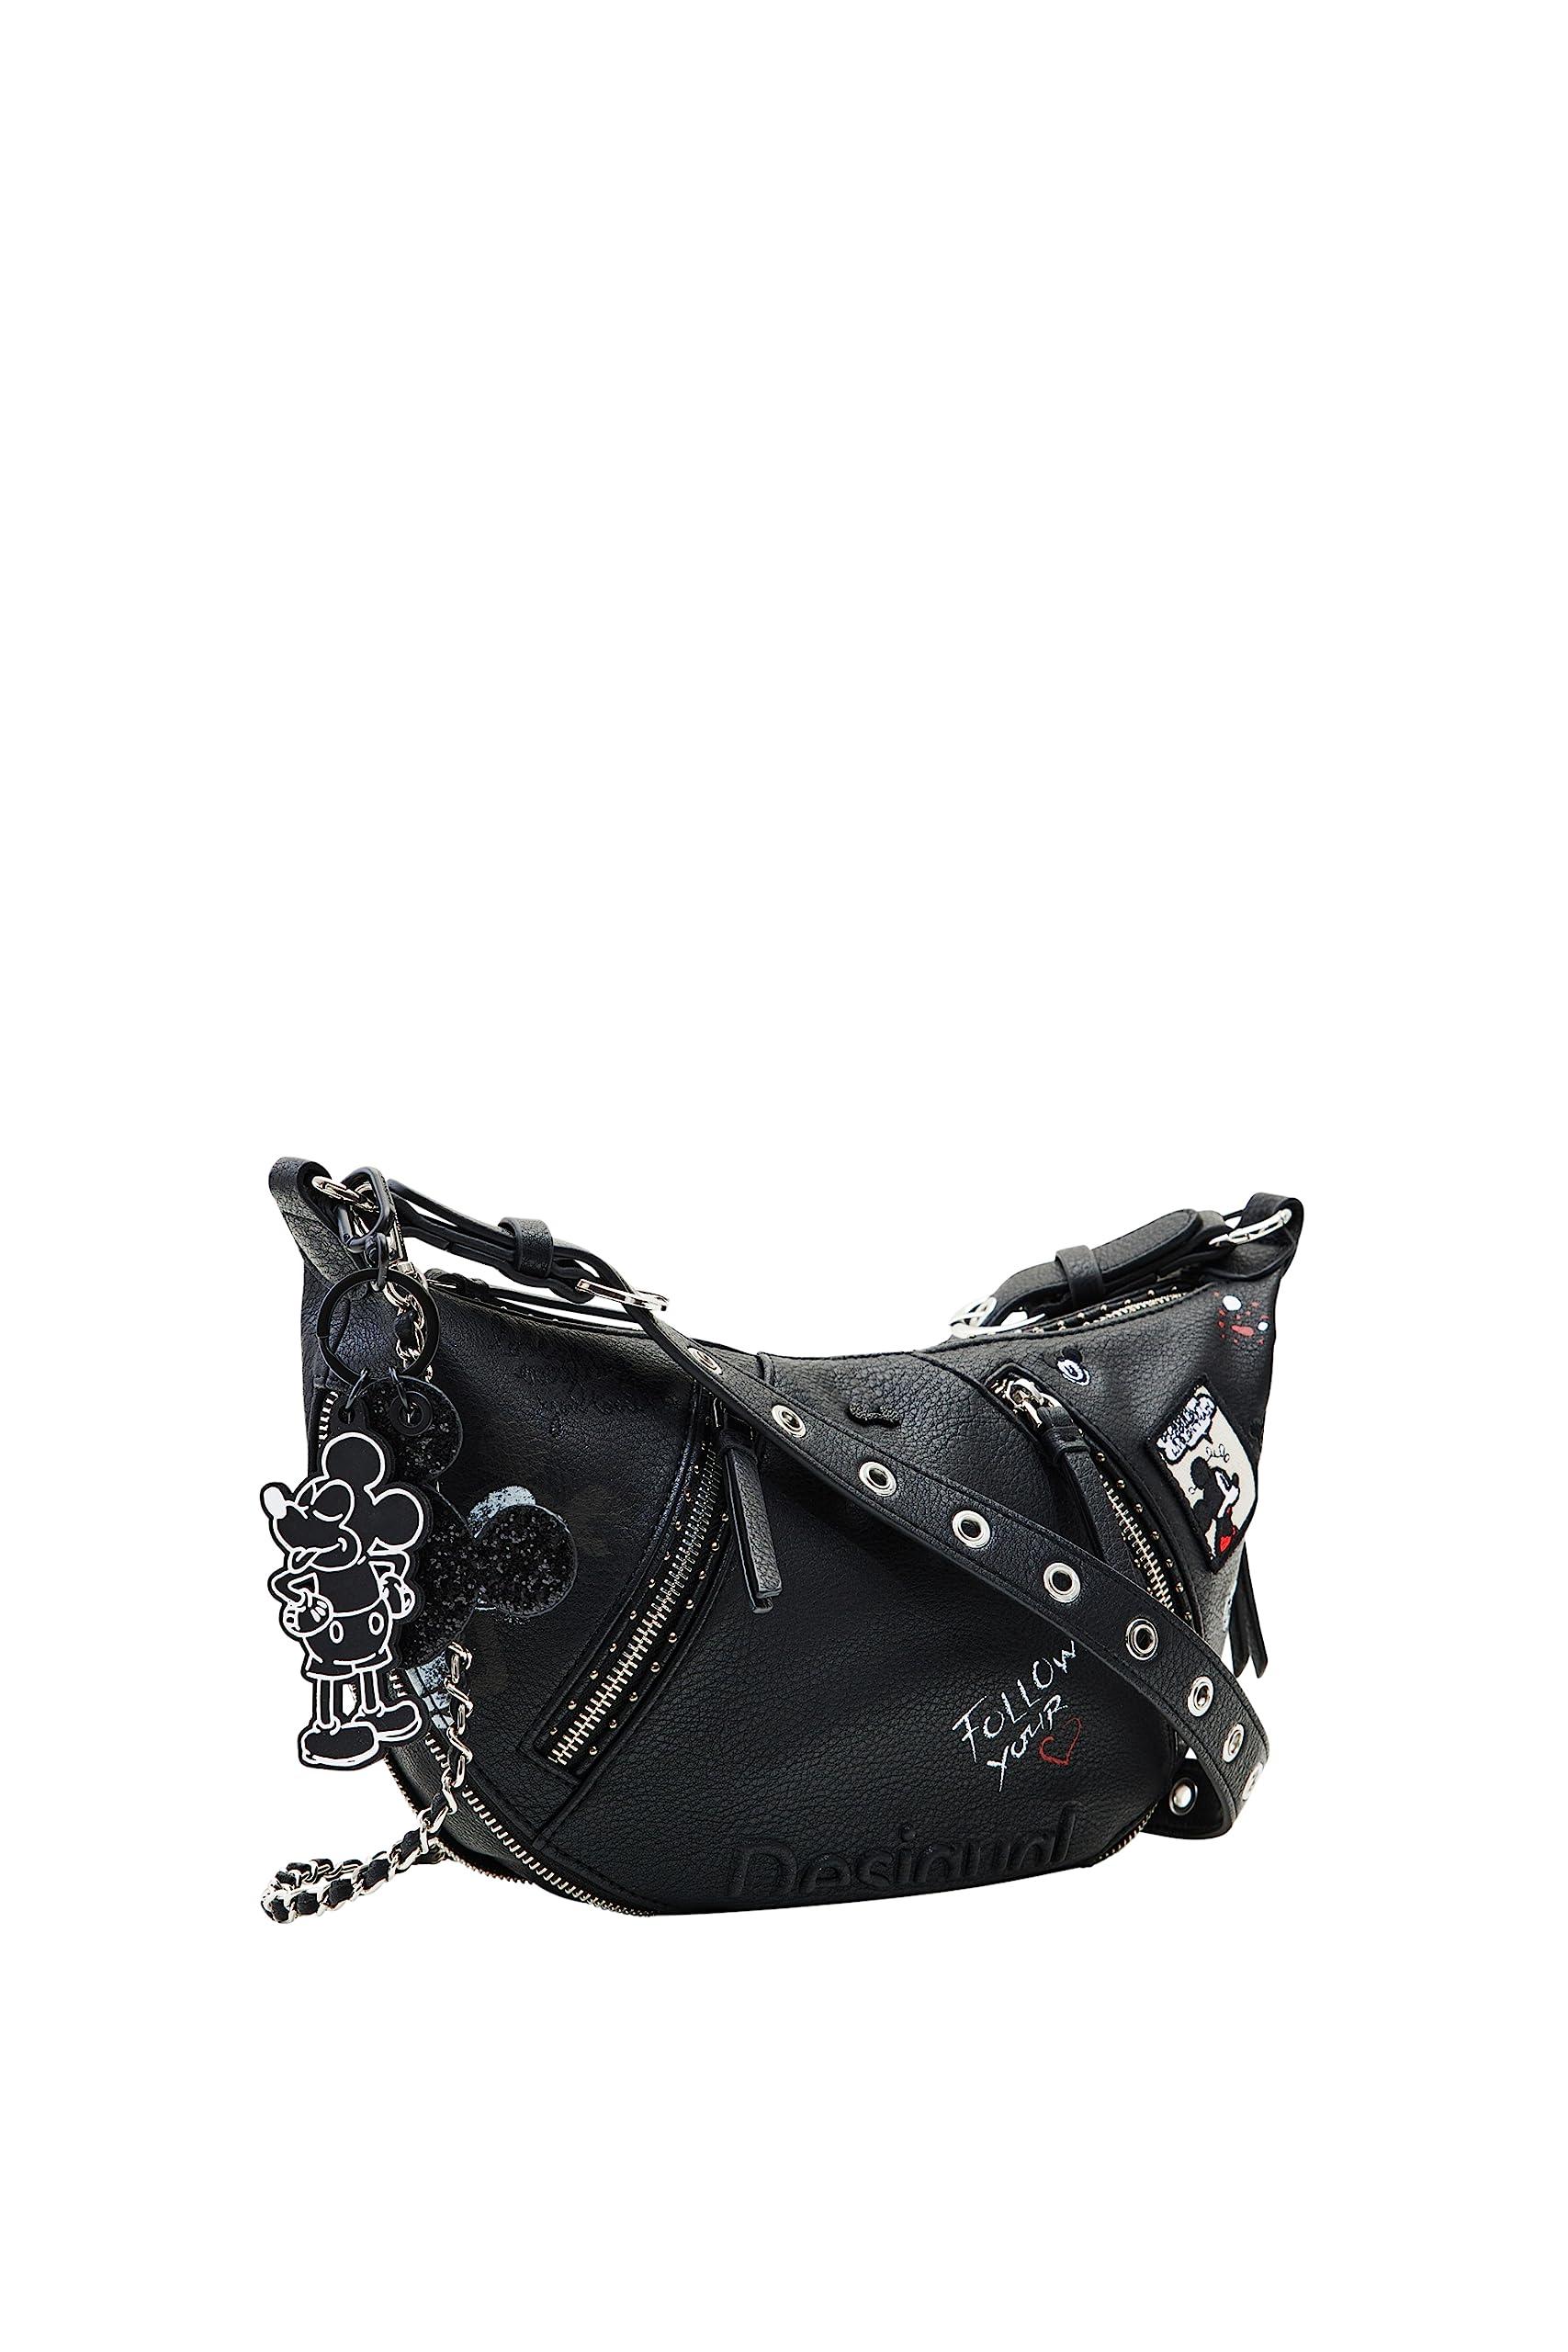 Harley-Davidson Black Leather Exterior Bags & Handbags for Women for sale |  eBay